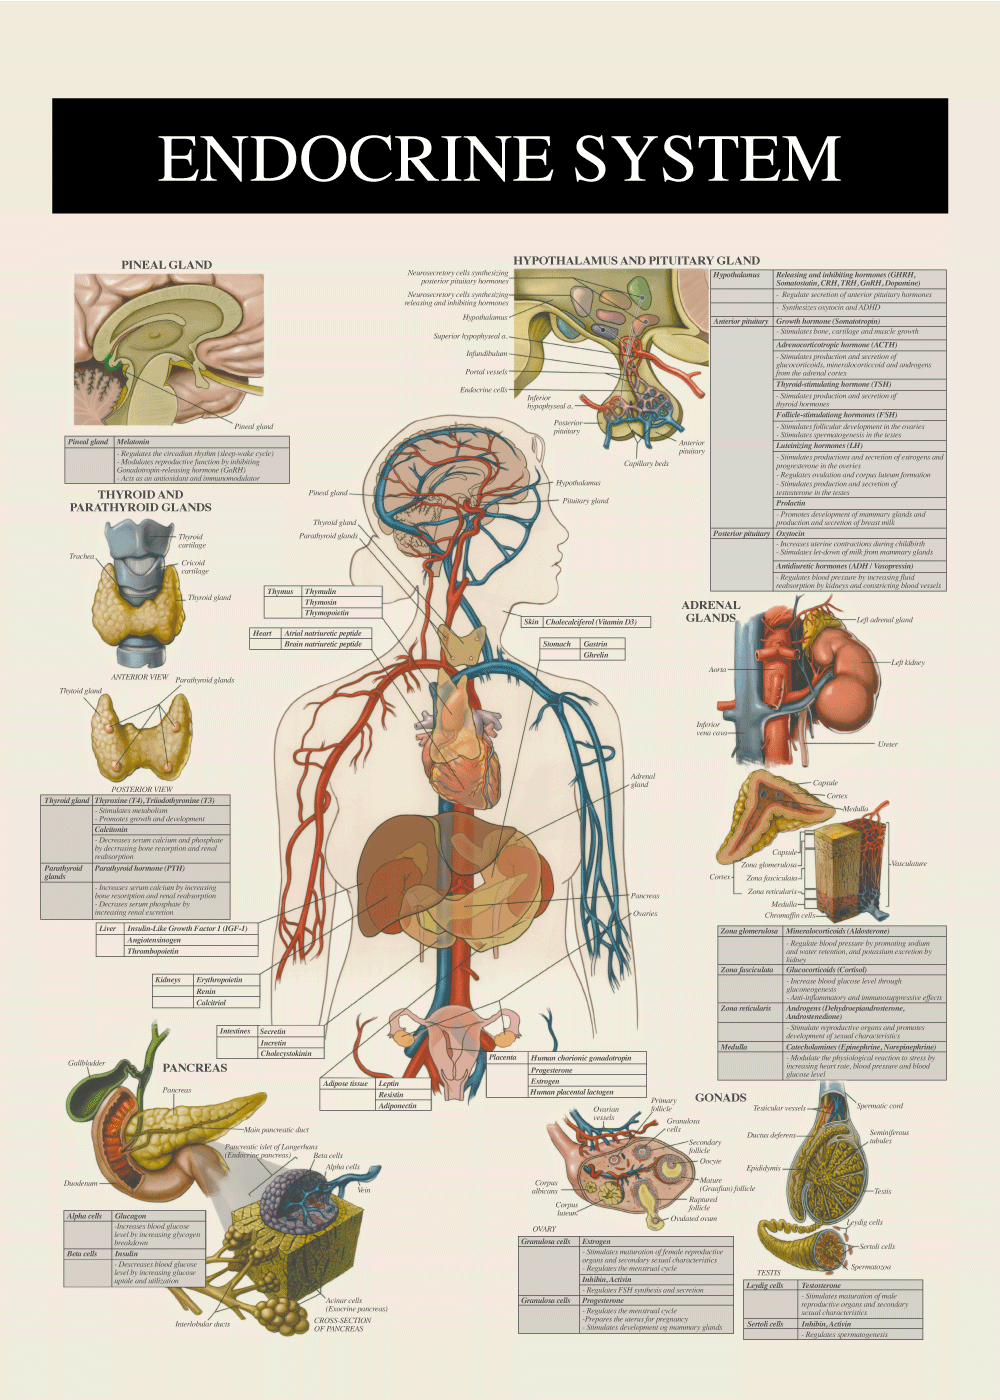 Porto Poesi Øde Anatomi plakater » Lærerige plakater med kroppens anatomi